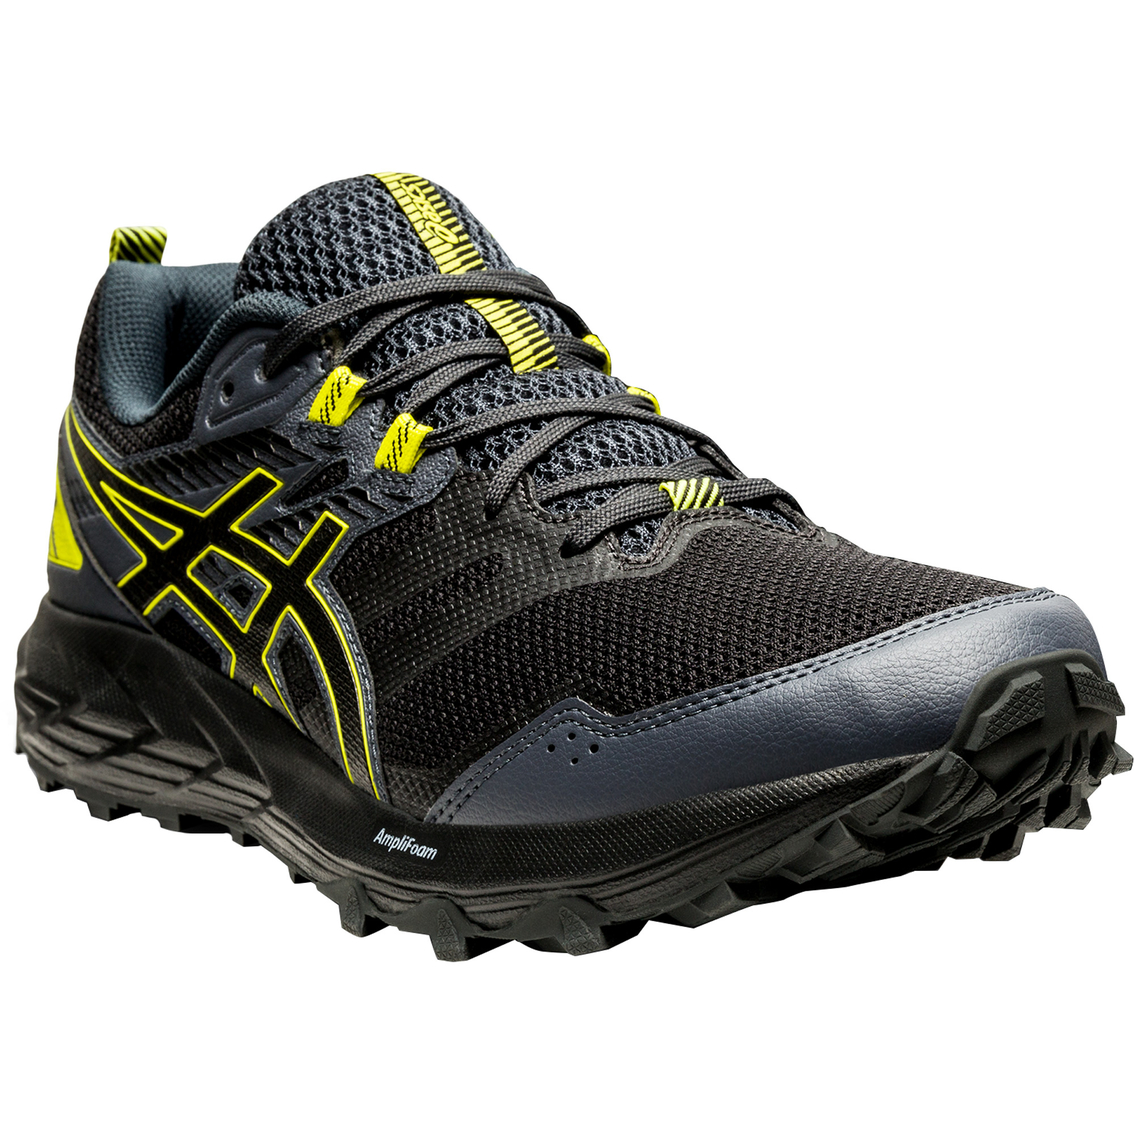 Asics Men's Gel Sonoma 6 Trail Running Shoes | Men's Athletic Shoes ...